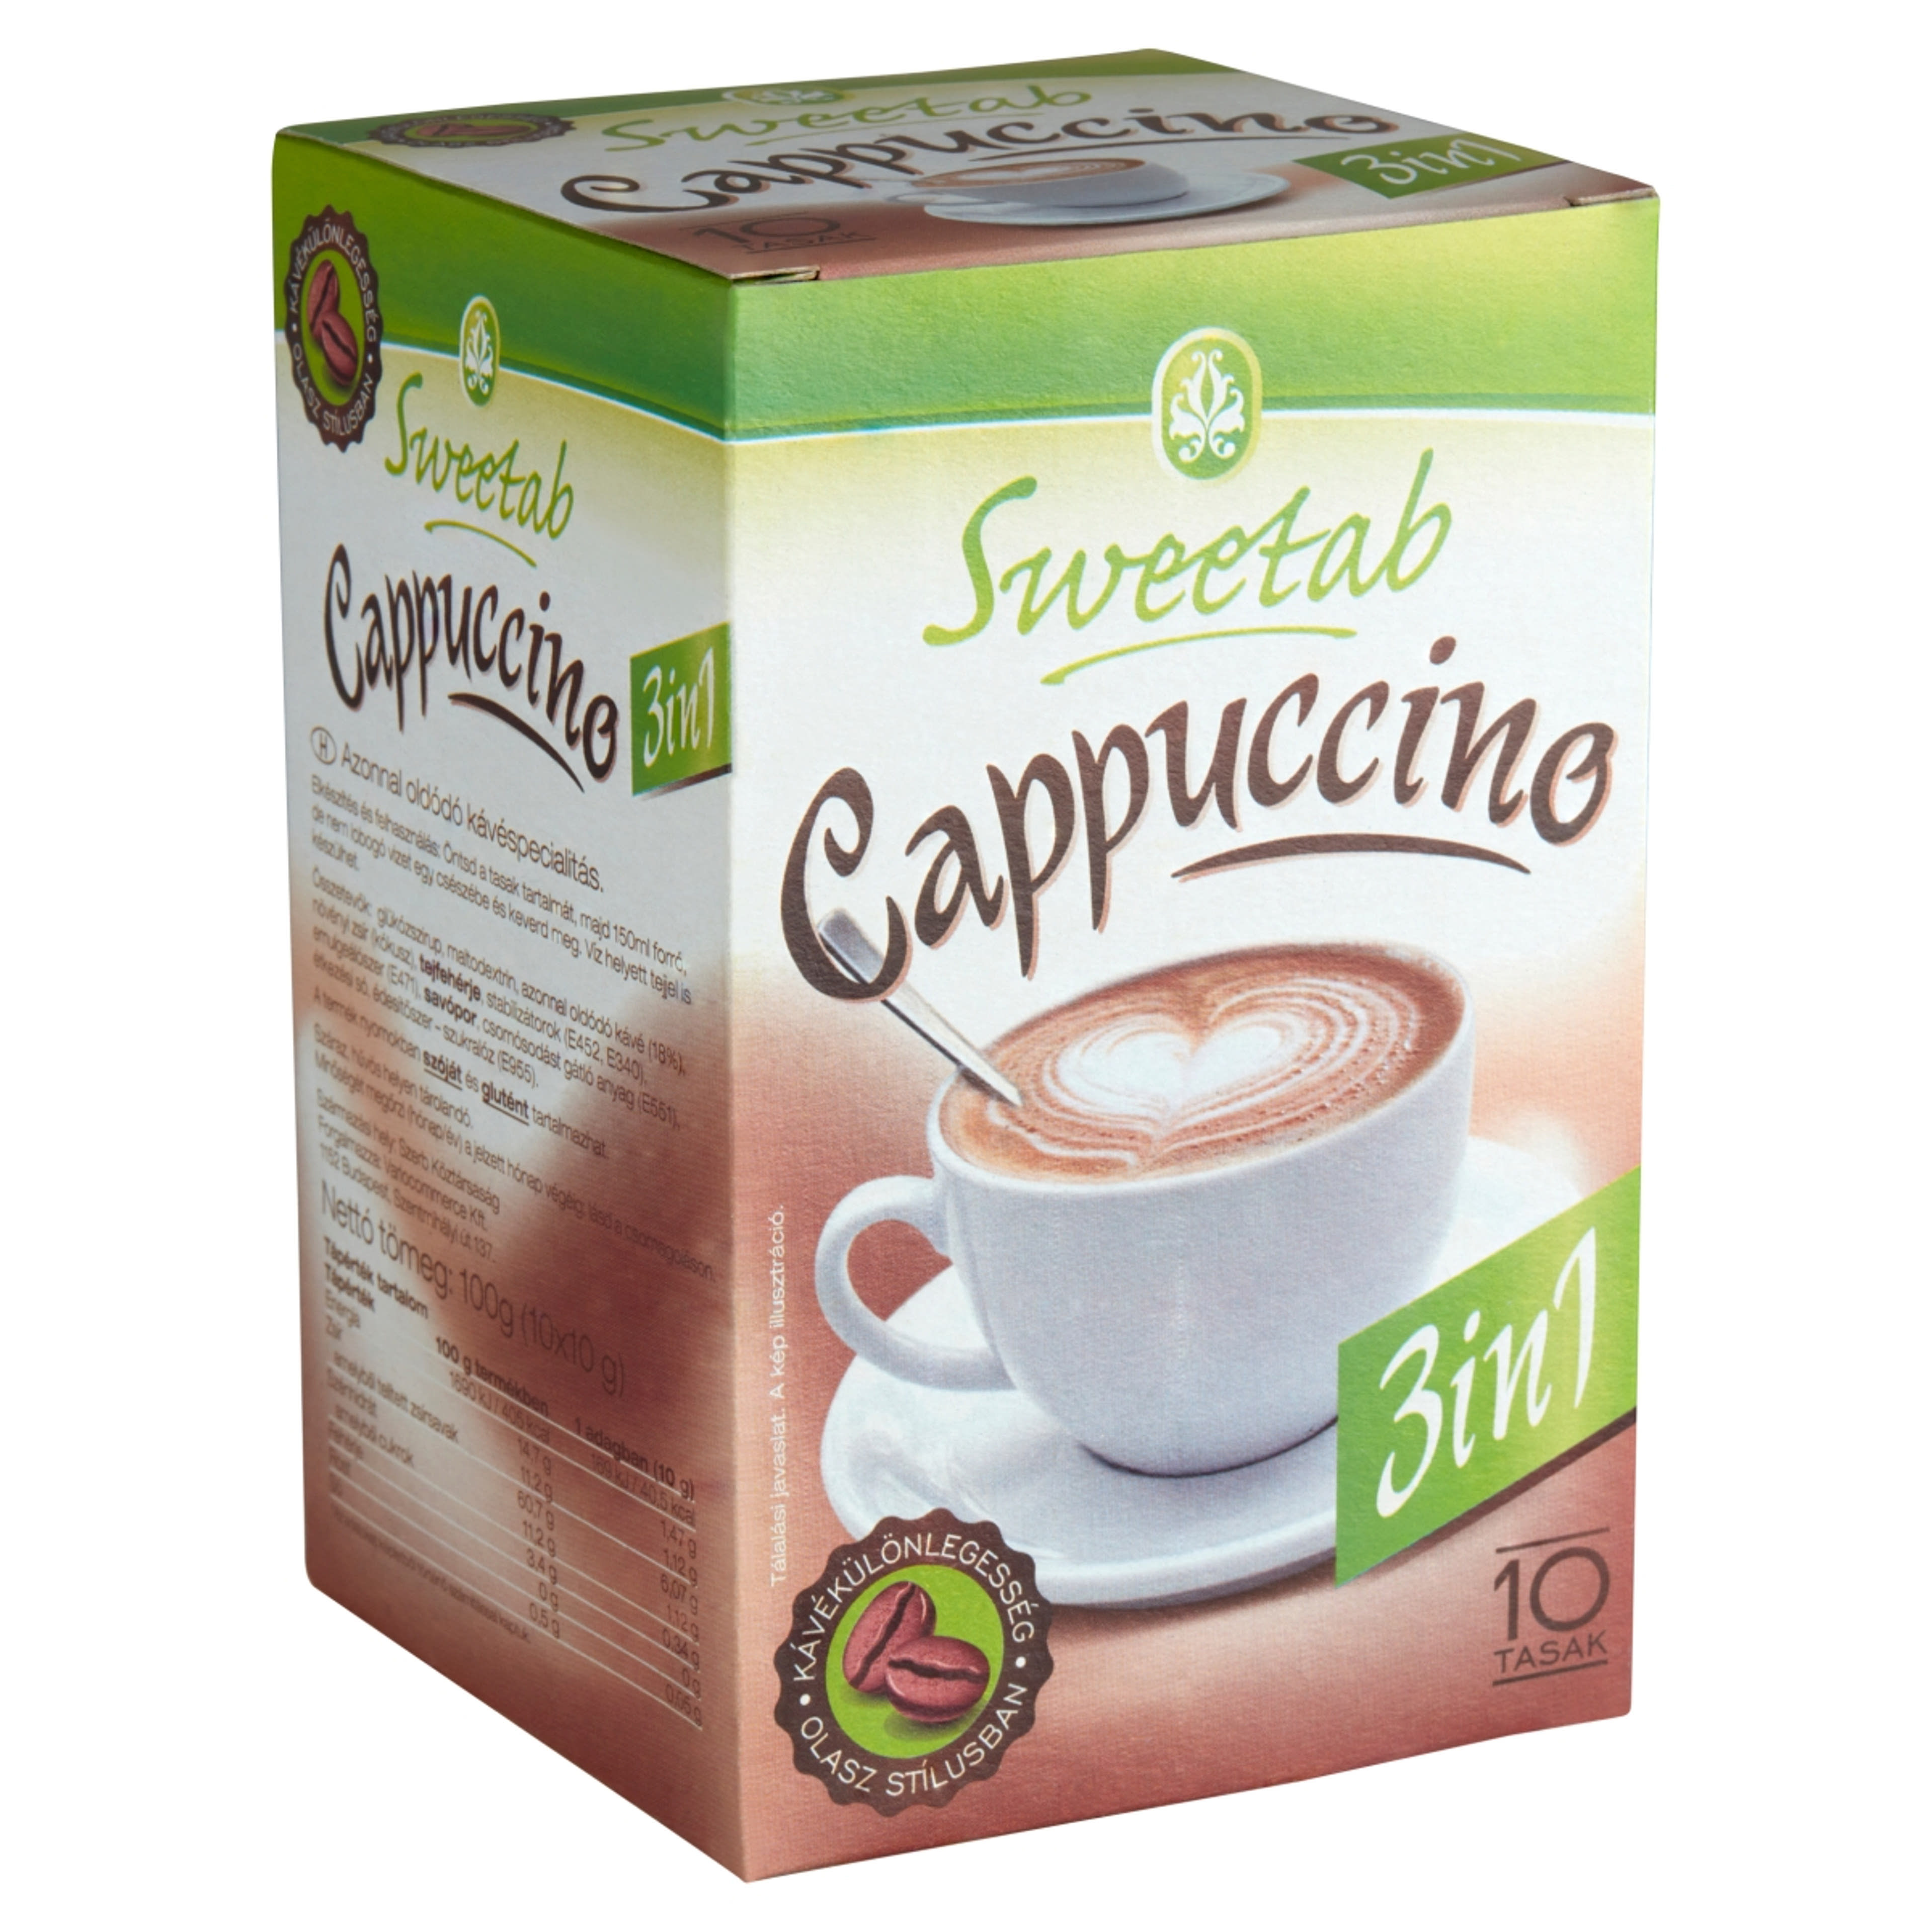 Sweetab cukormentes cappuccino 10x10 - 100 g-2